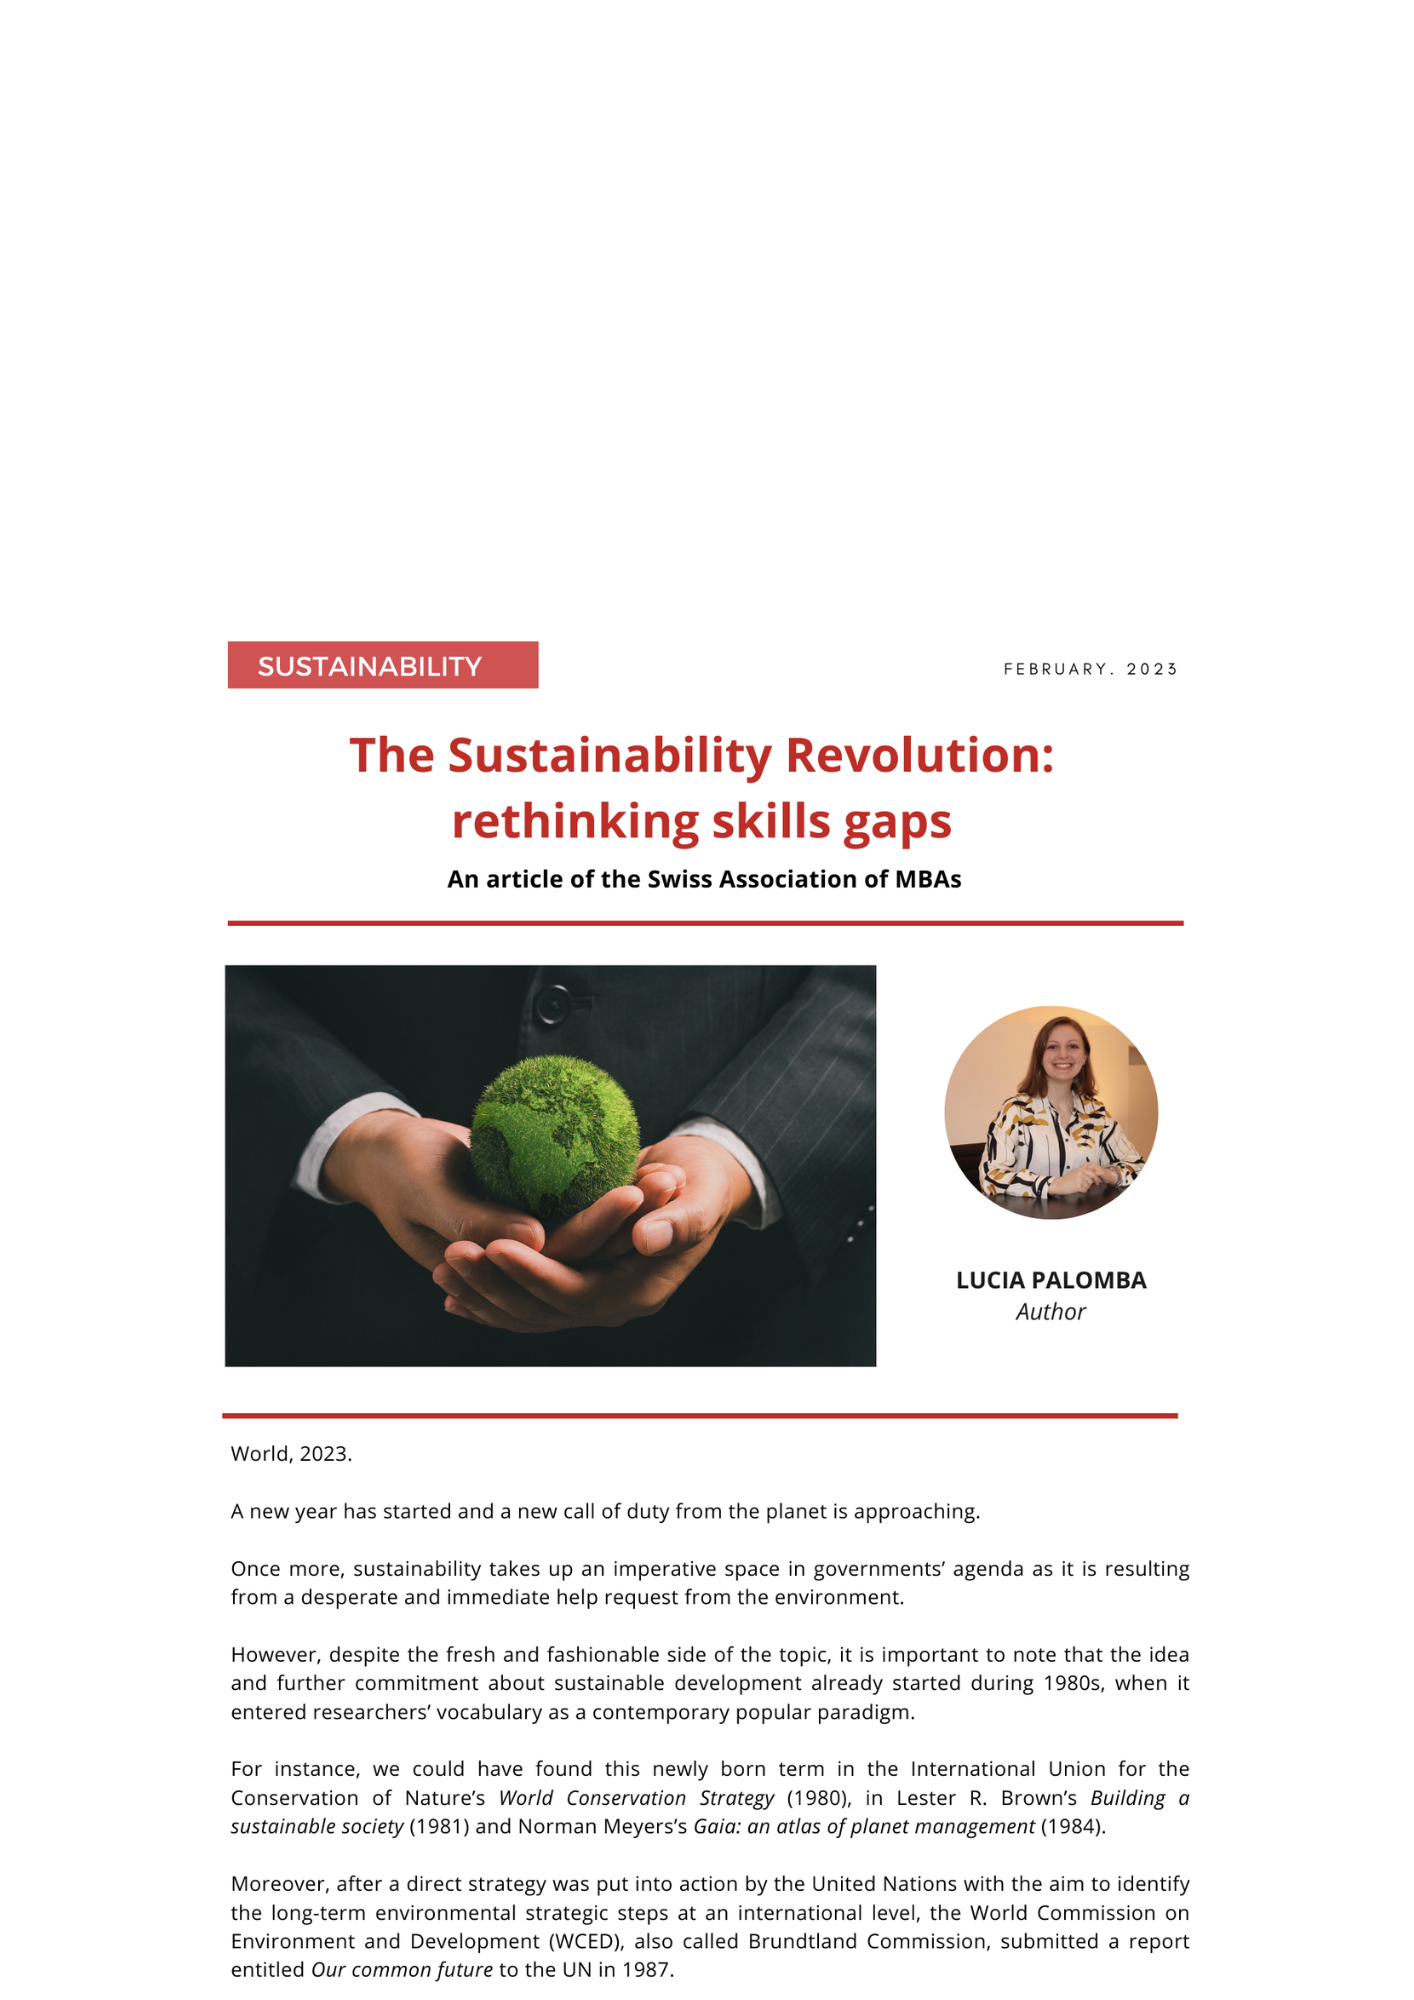 The Sustainability Revolution: rethinking skills gaps